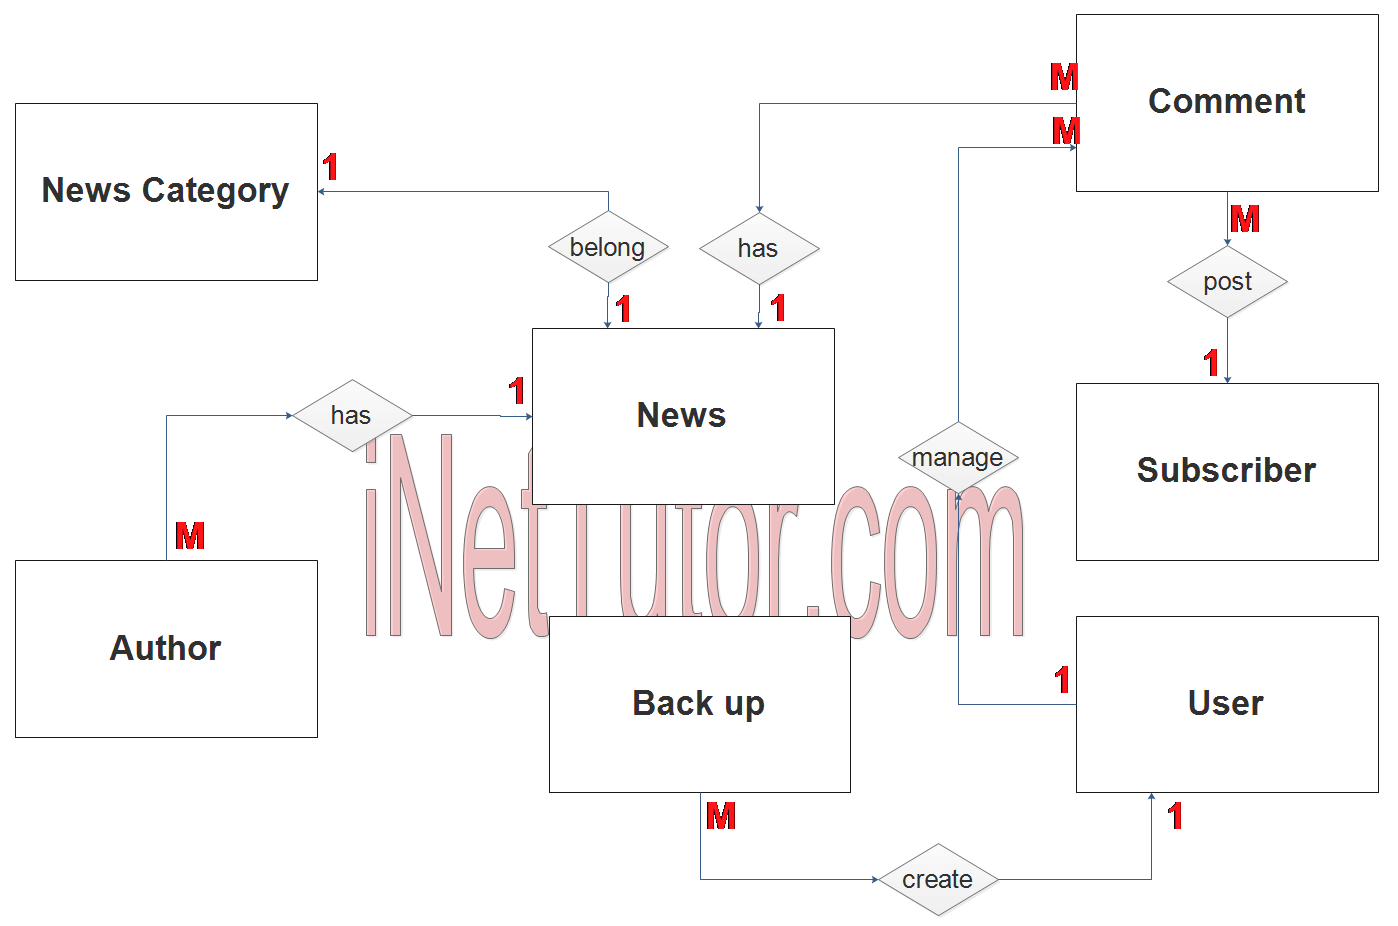 News Portal Application ER Diagram - Step 2 Table Relationship